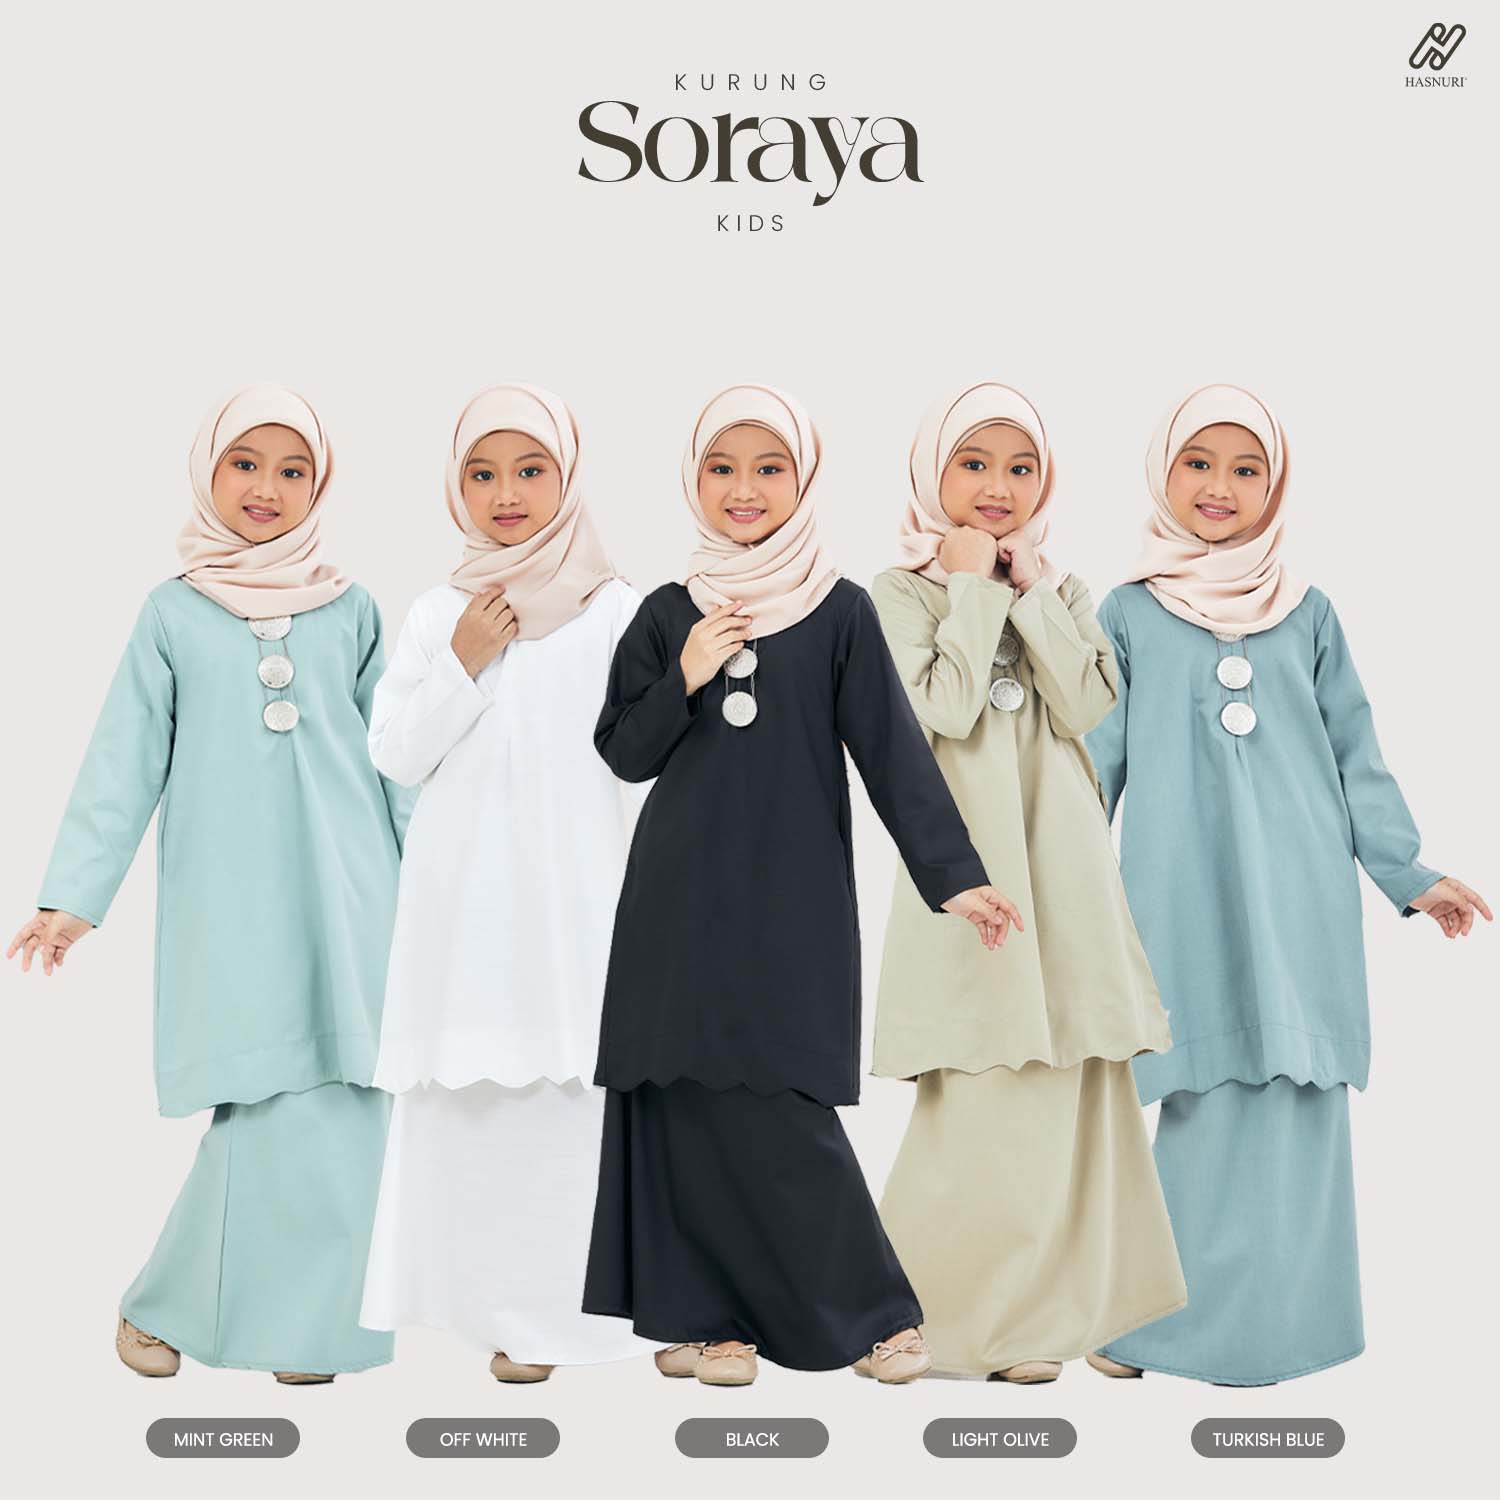 Kurung Soraya Kids - Turkish Blue